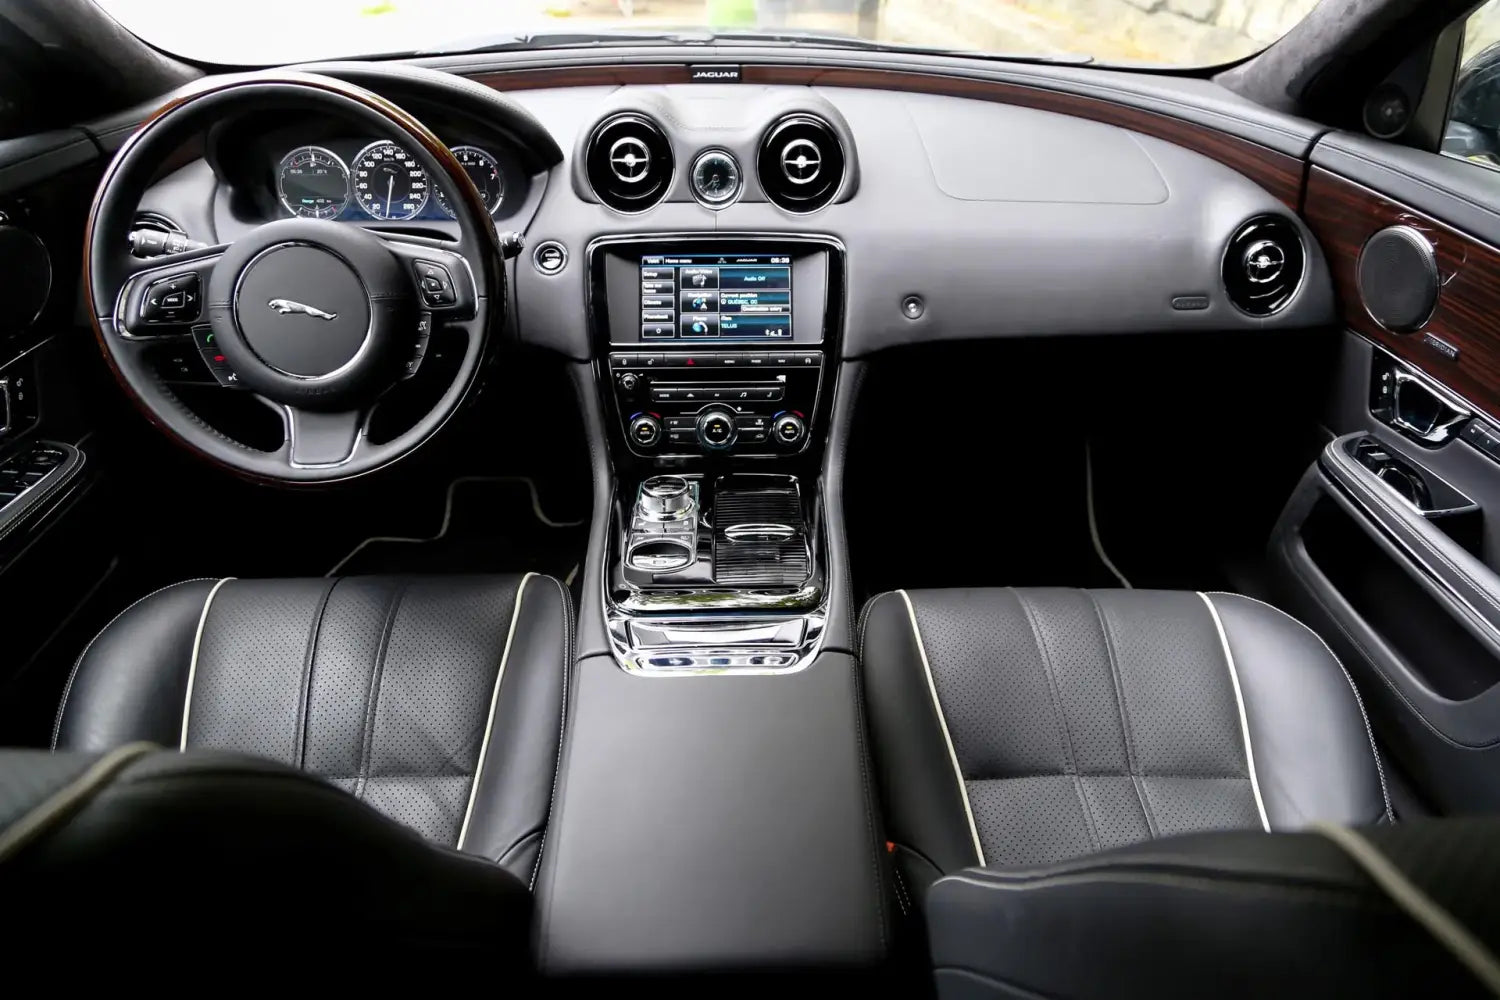 Android 12 Car Radio Dual System for Jaguar XJ XJL XJR 2009